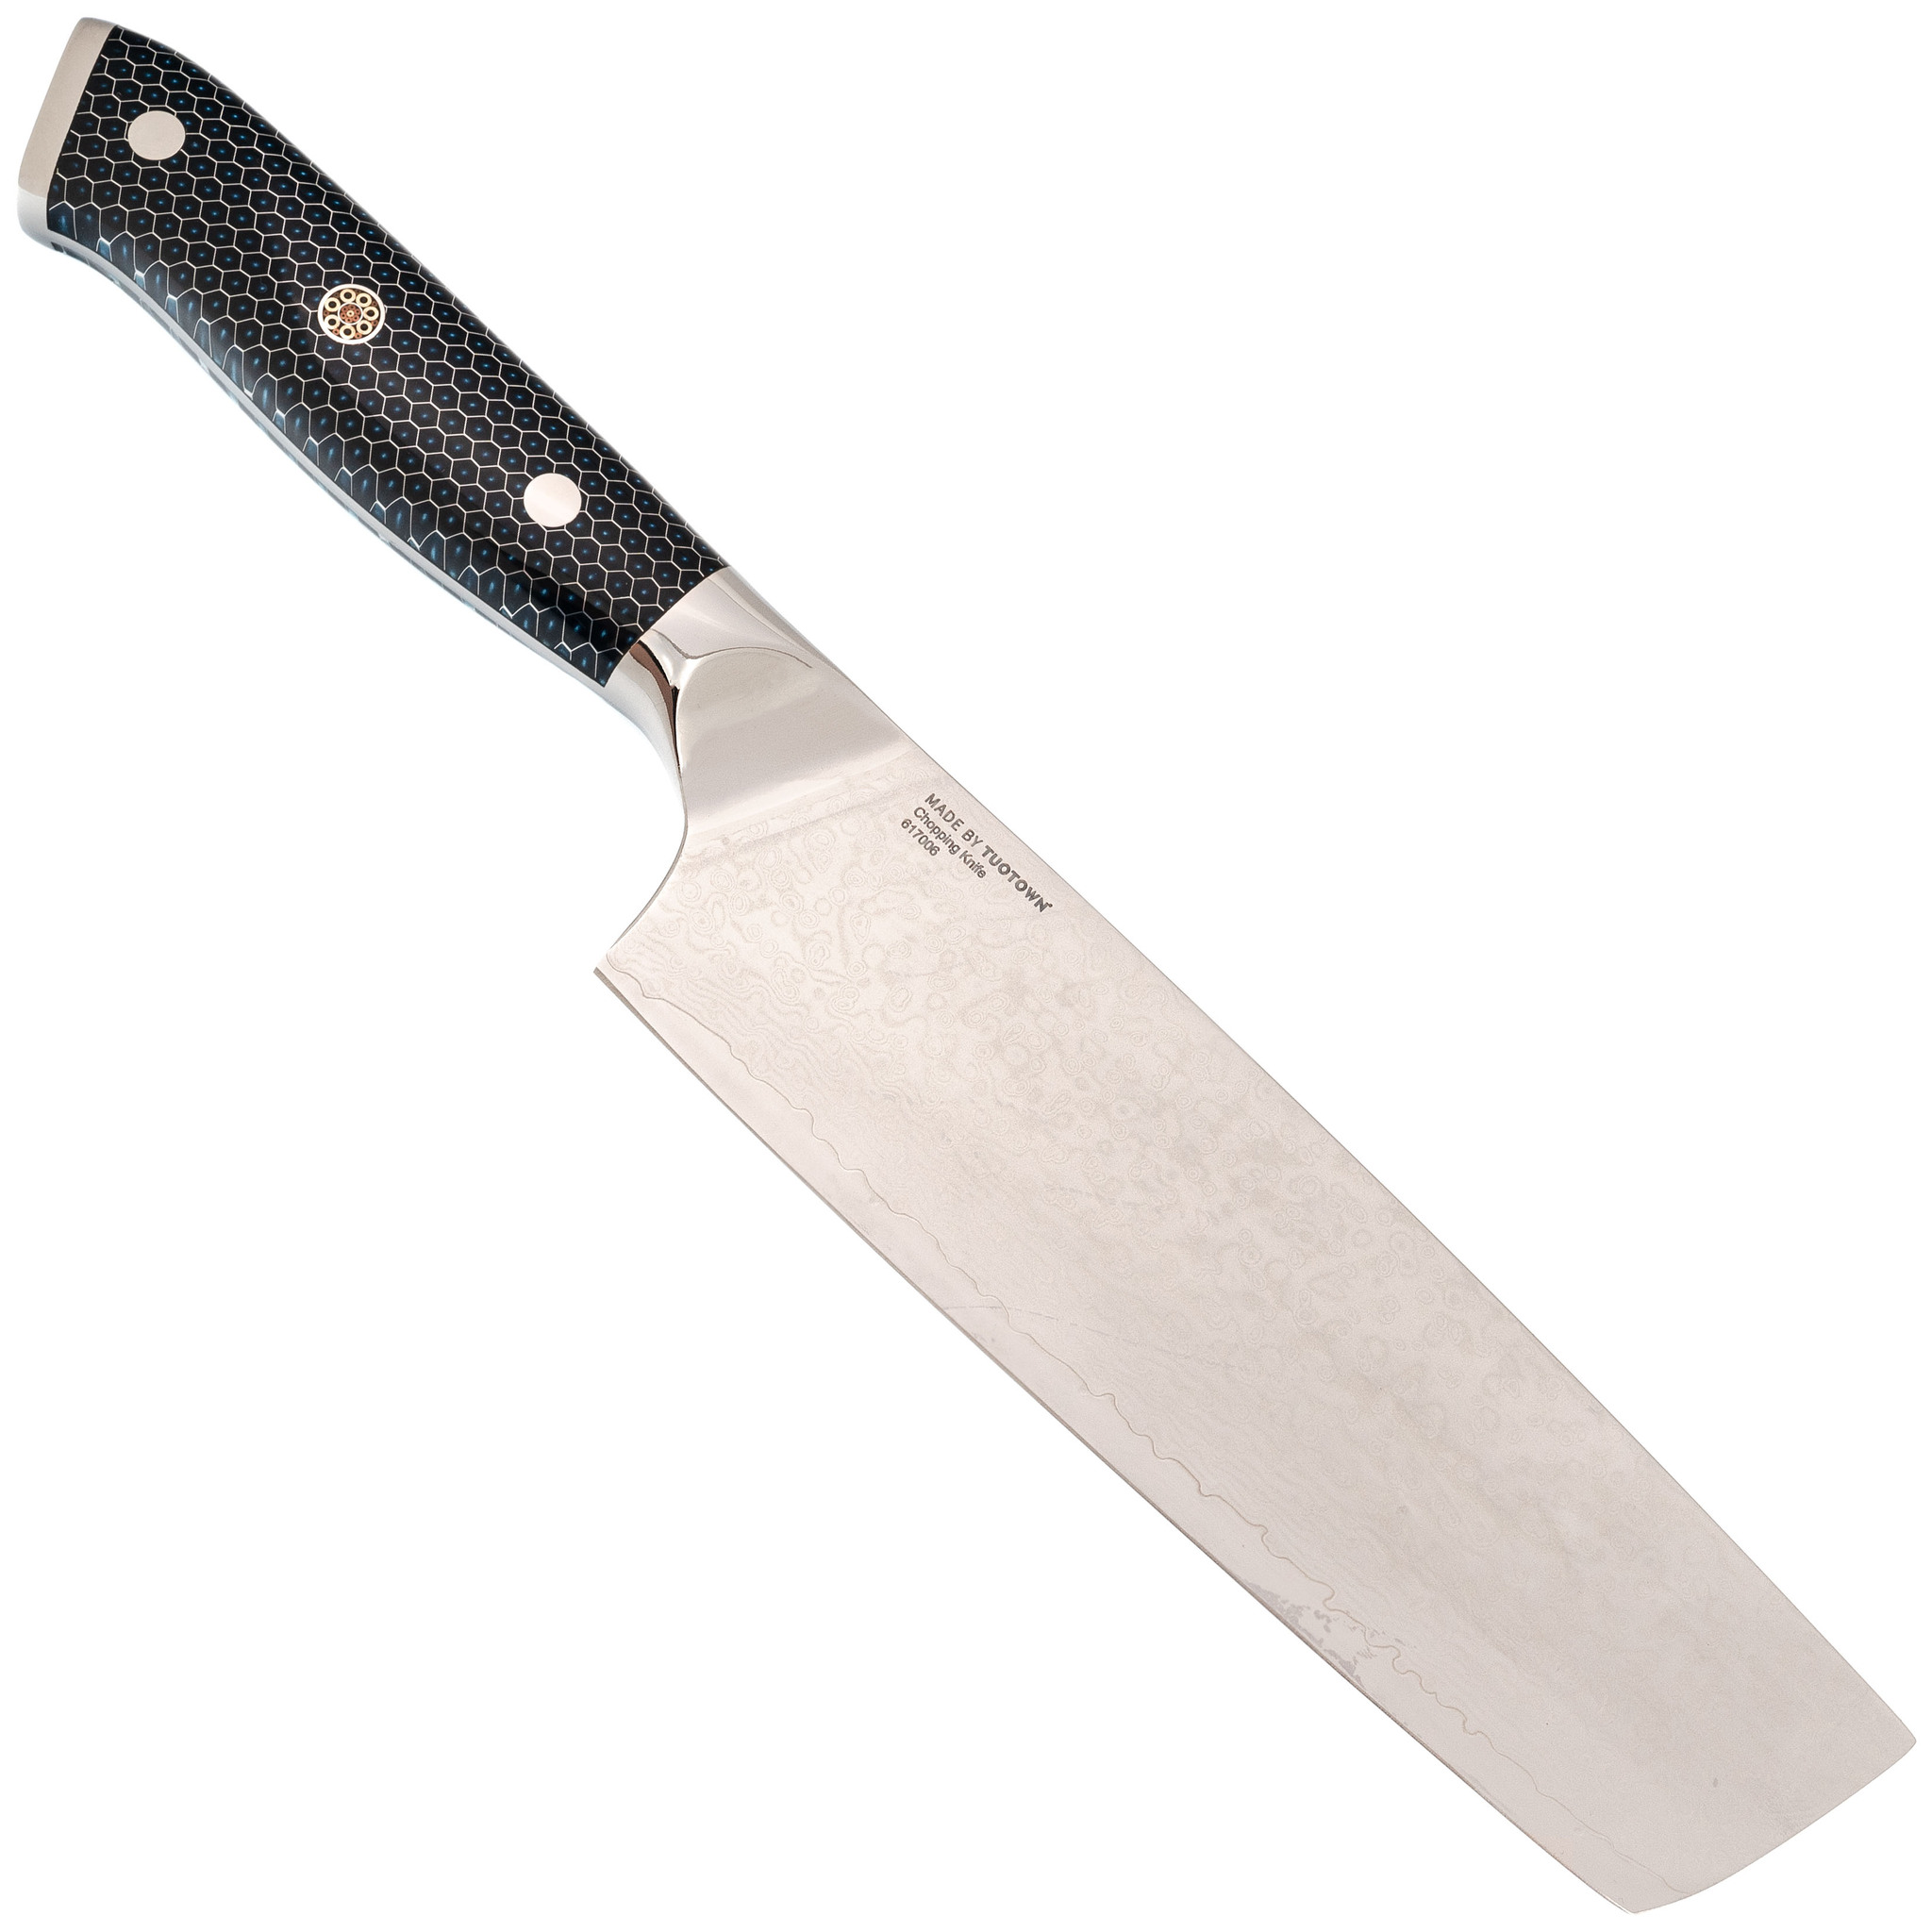 Кухонный нож Накири Tuotown, сталь VG10, обкладка Damascus, рукоять акрил, синий - фото 3